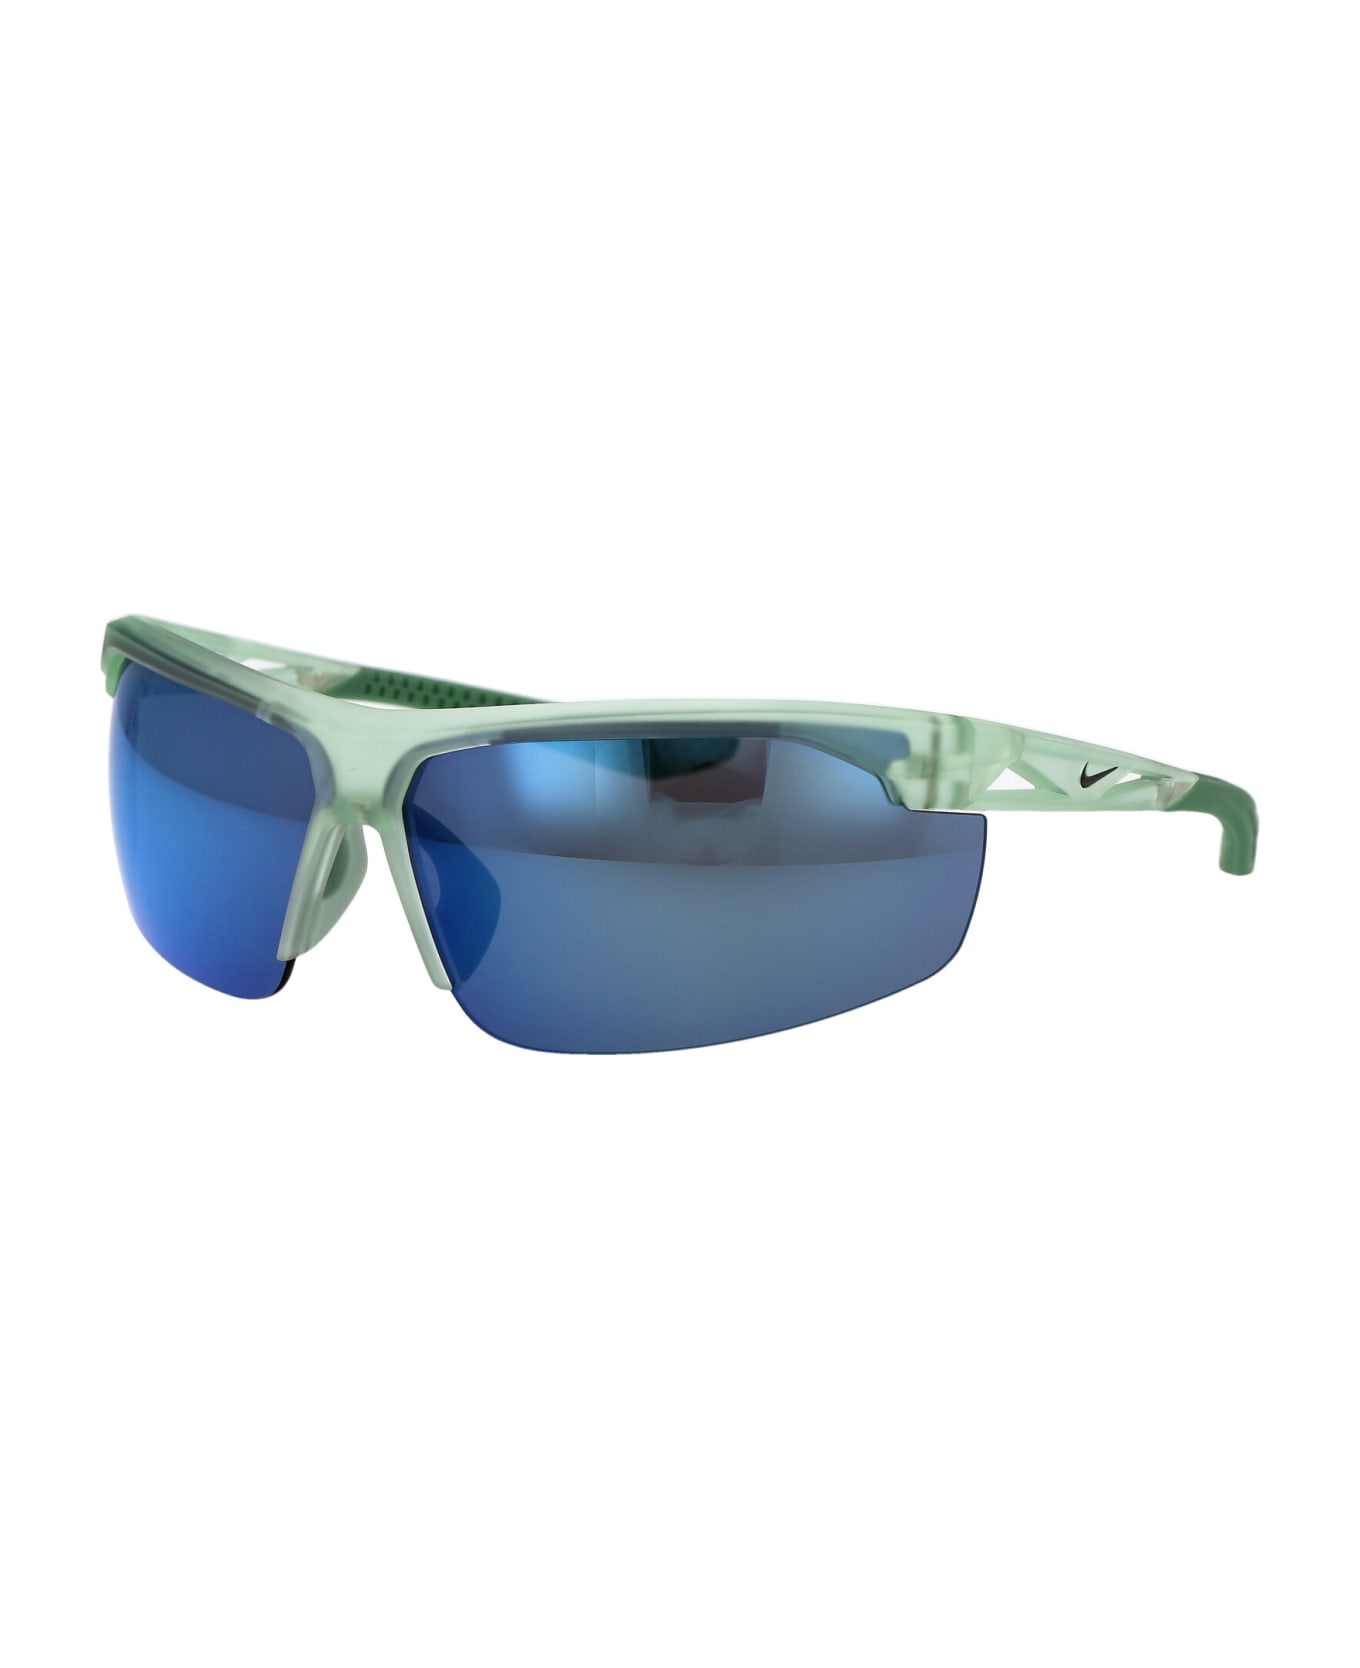 Nike Windtrack M Sunglasses - 301 SOLID GREY MIRROR MATTE JADE ICE サングラス